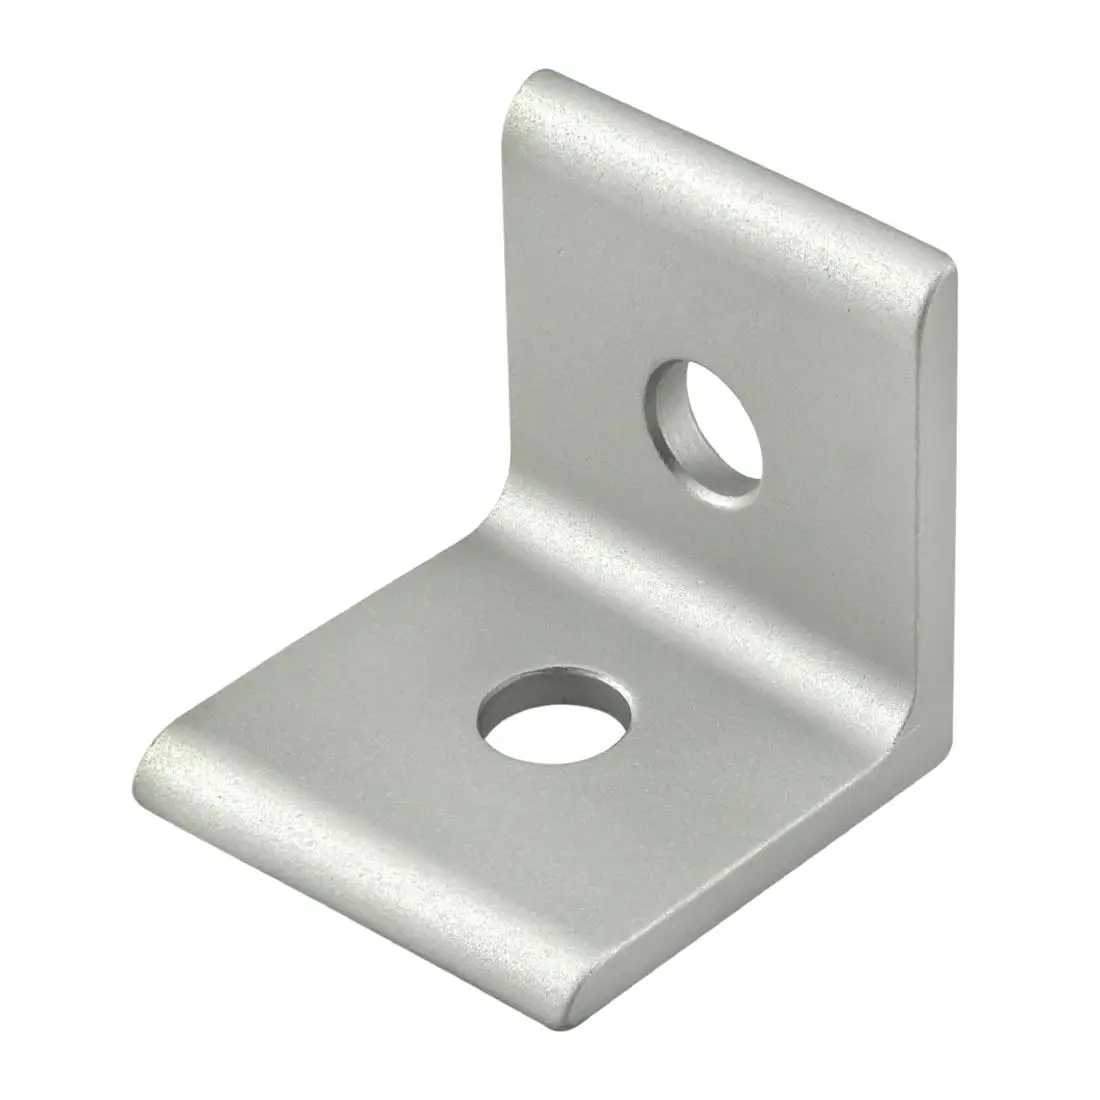 Aluminum Alloy Extrusion 10 series 2 Hole Center Inside Corner Bracket 90 Degree L Shape Angle Connectors for T slot Profile